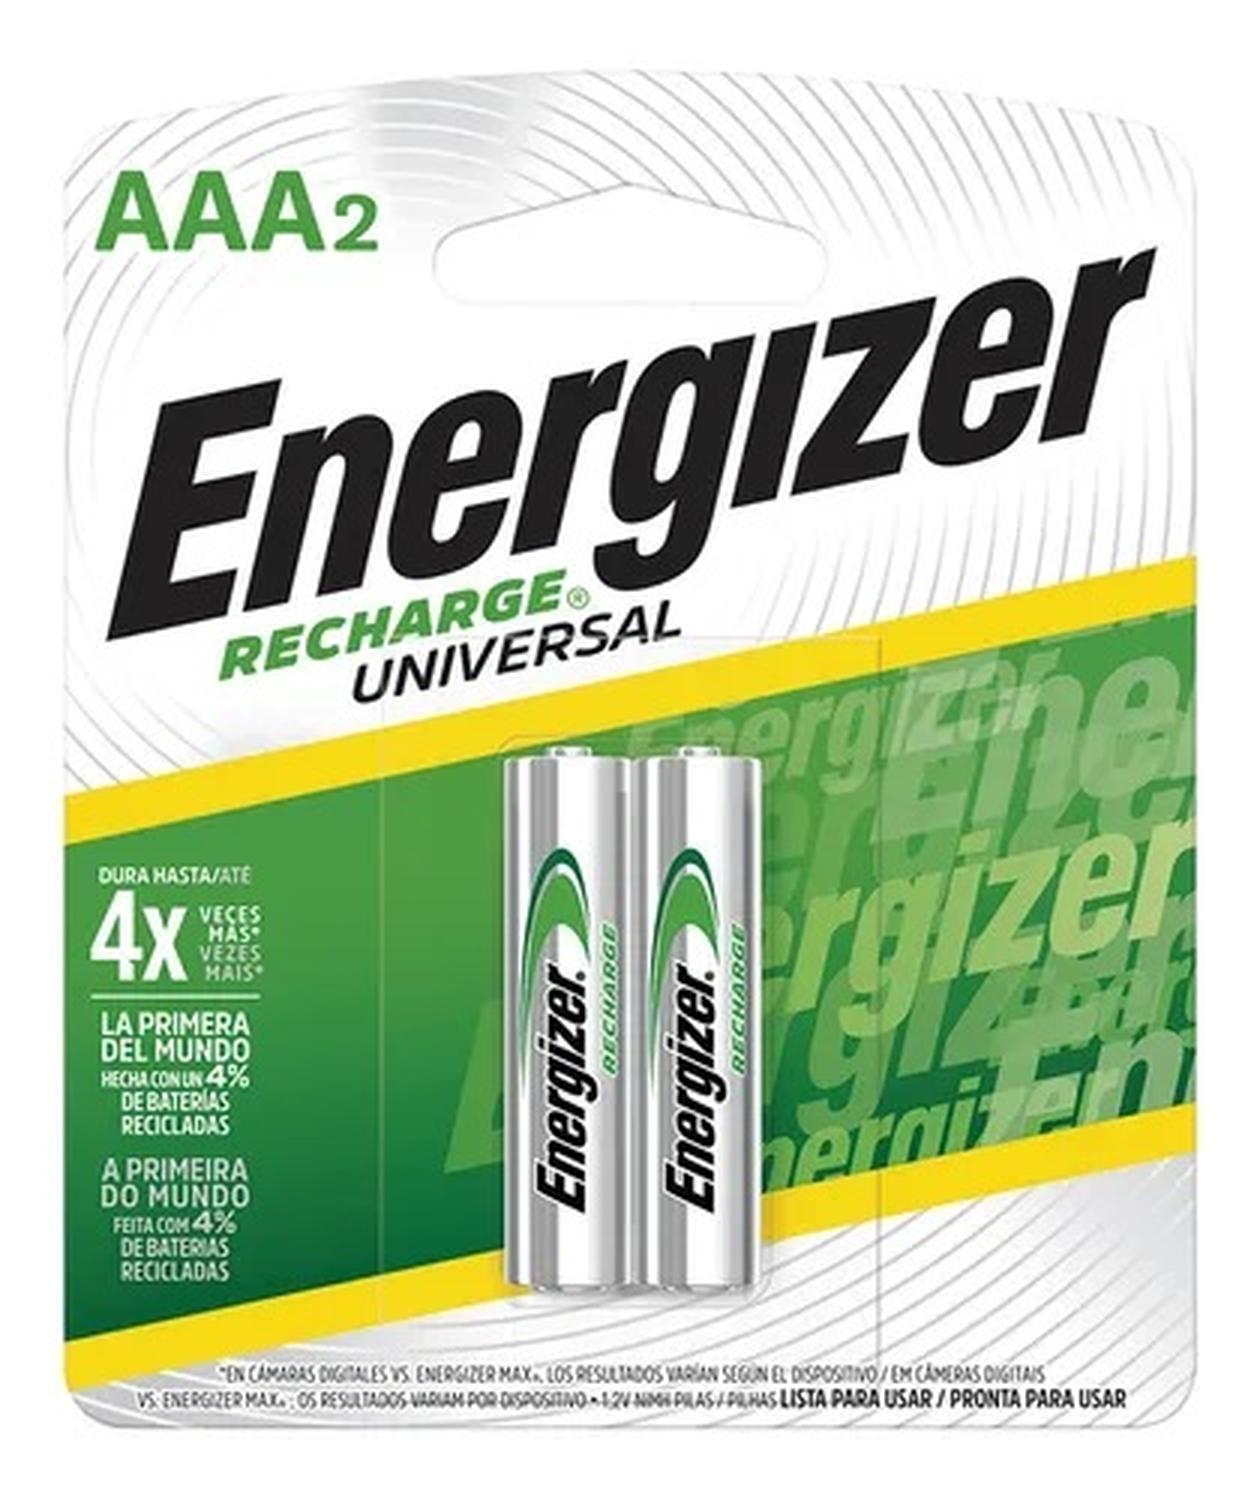 Pilas Recargables Energizer 2AA y 2AAA (4 Pilas) Energizer